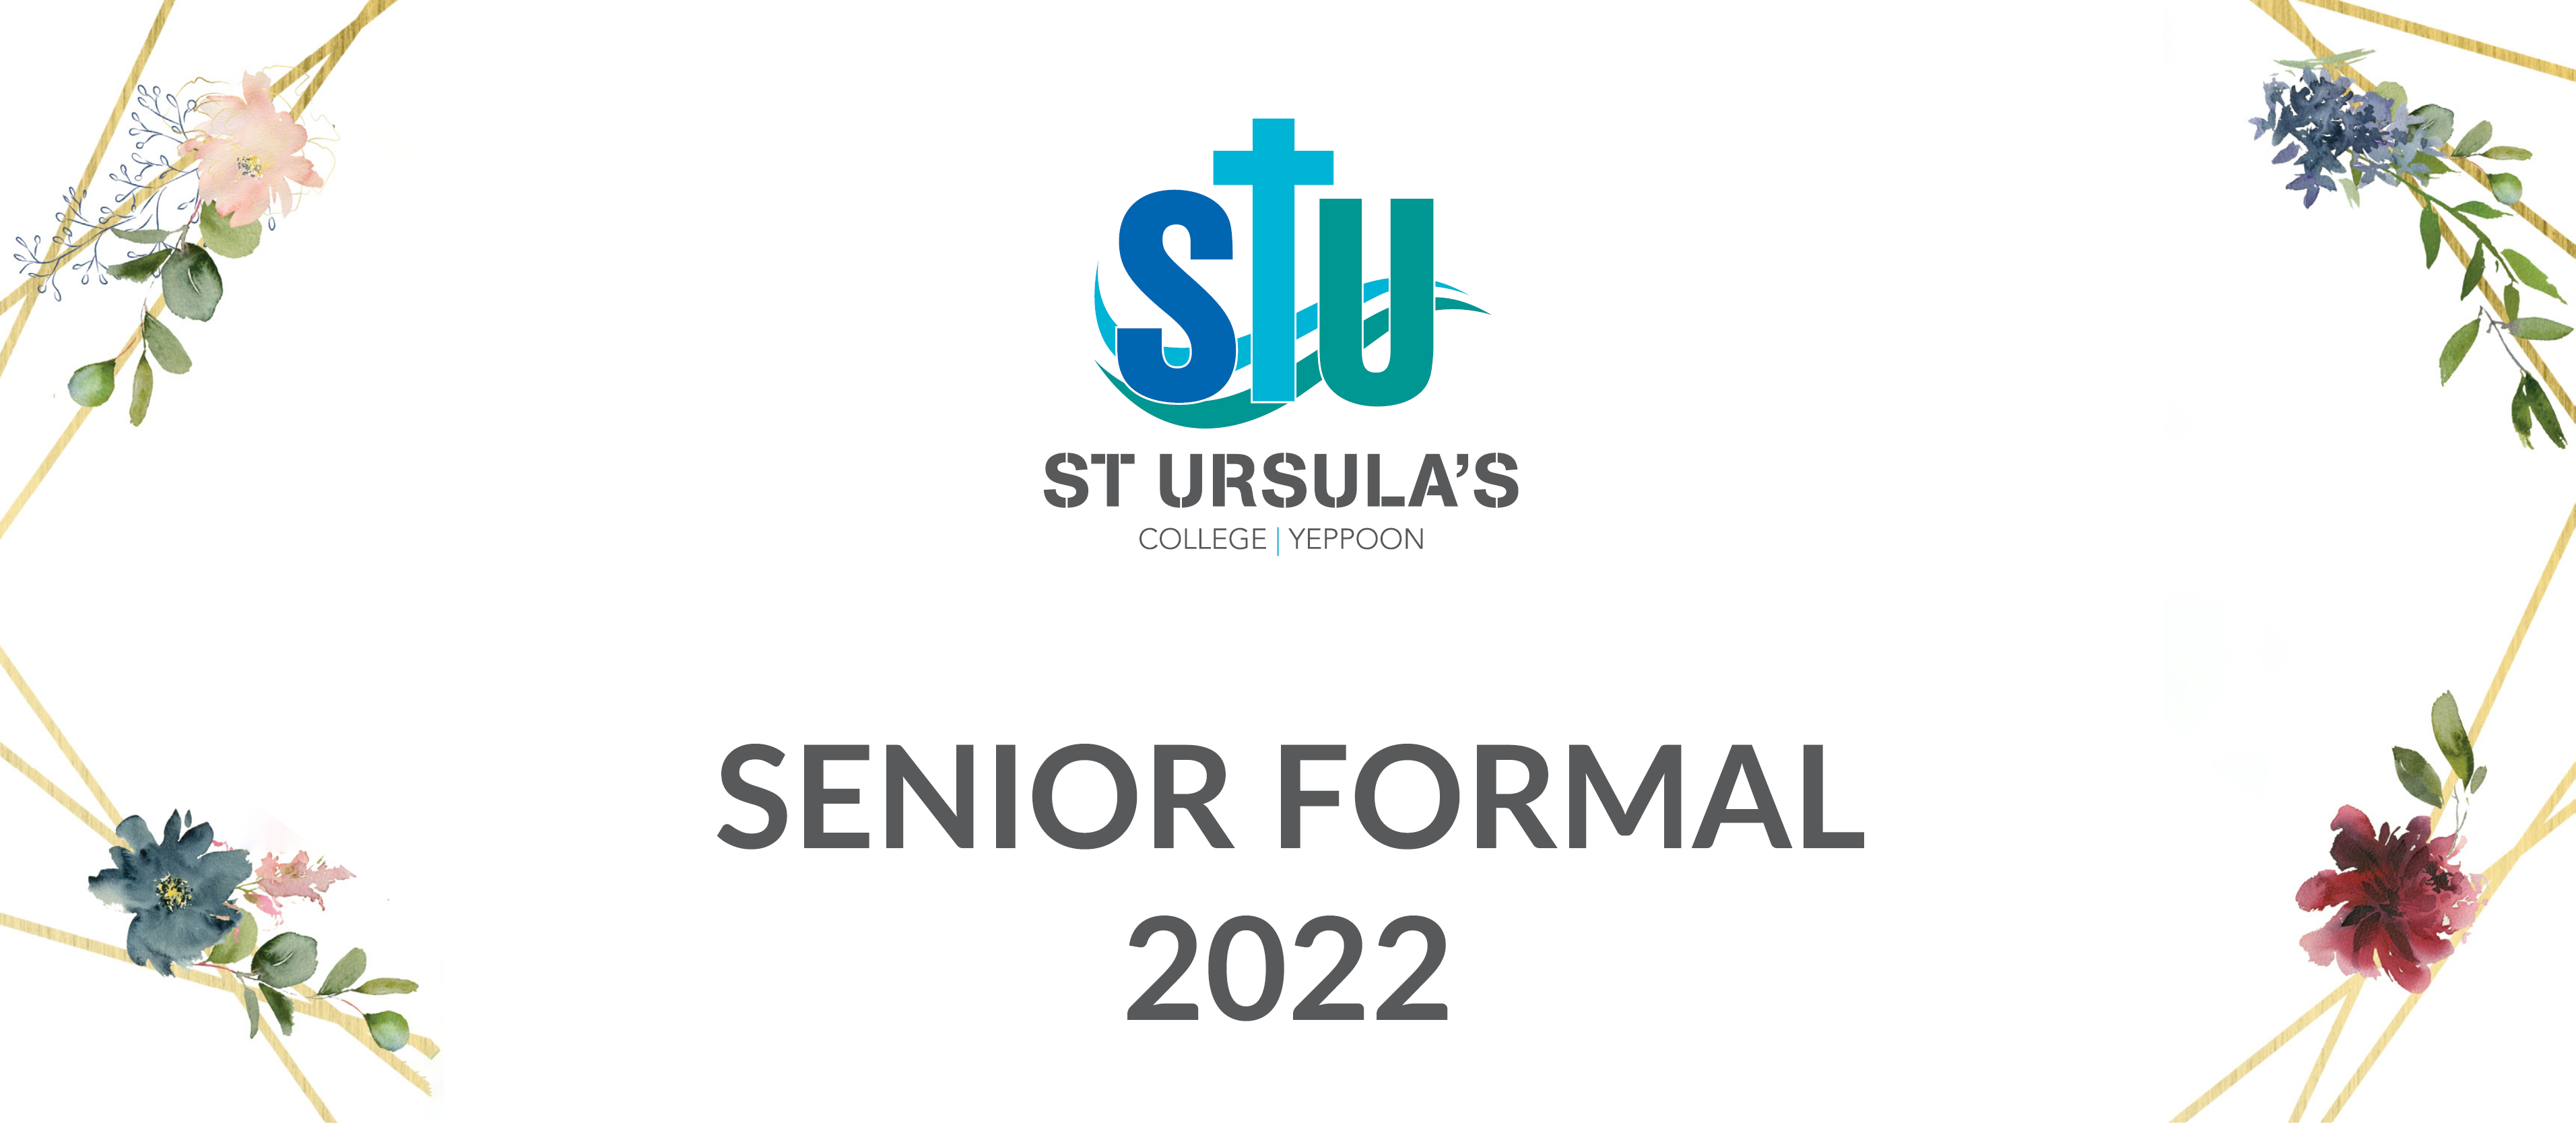 St Ursula's College 2022 Senior Formal